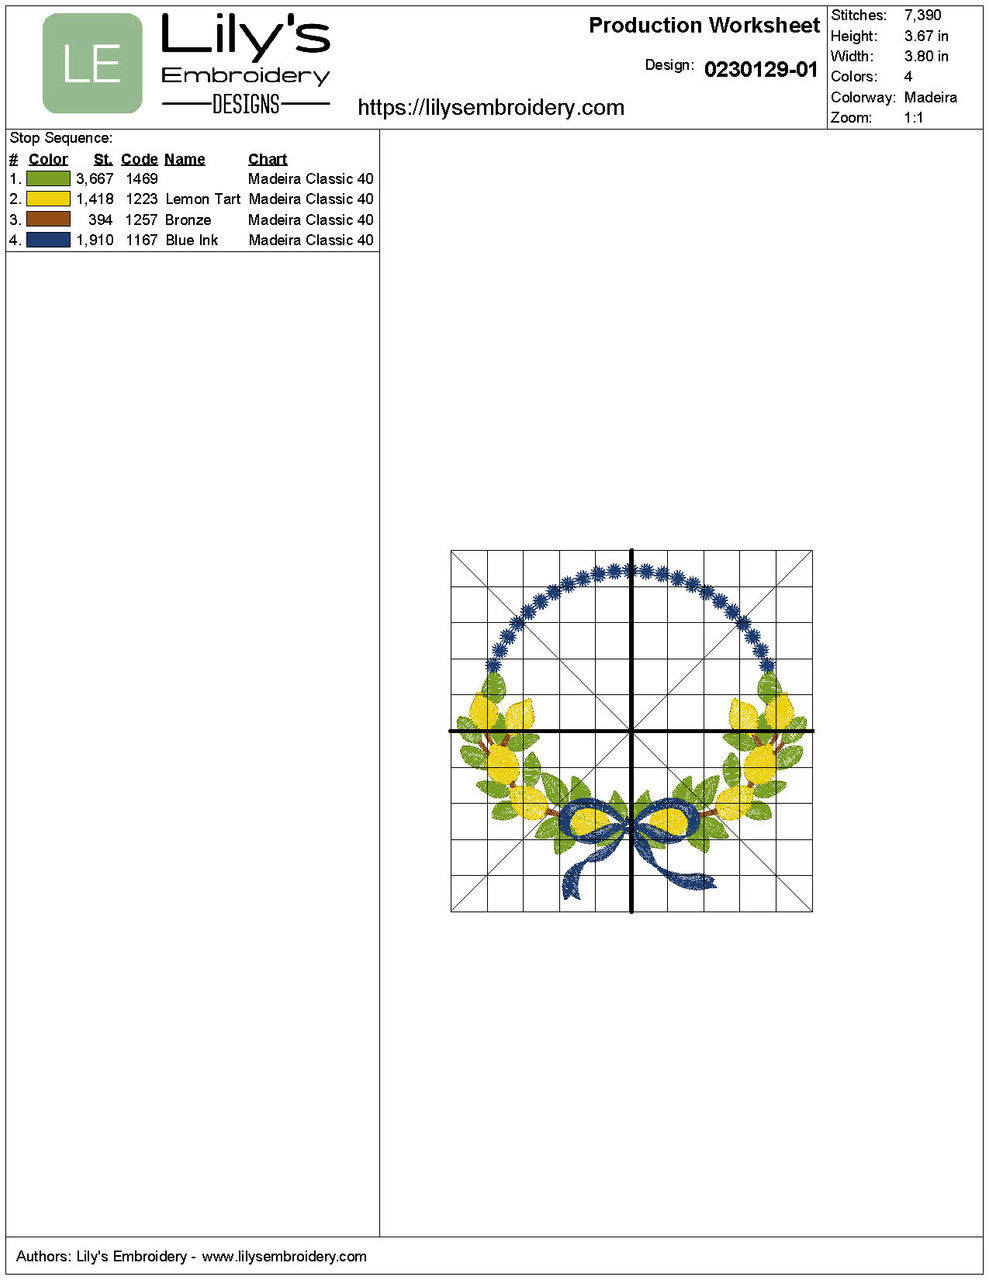 Lemon Wreath Machine Embroidery Designs 5 sizes